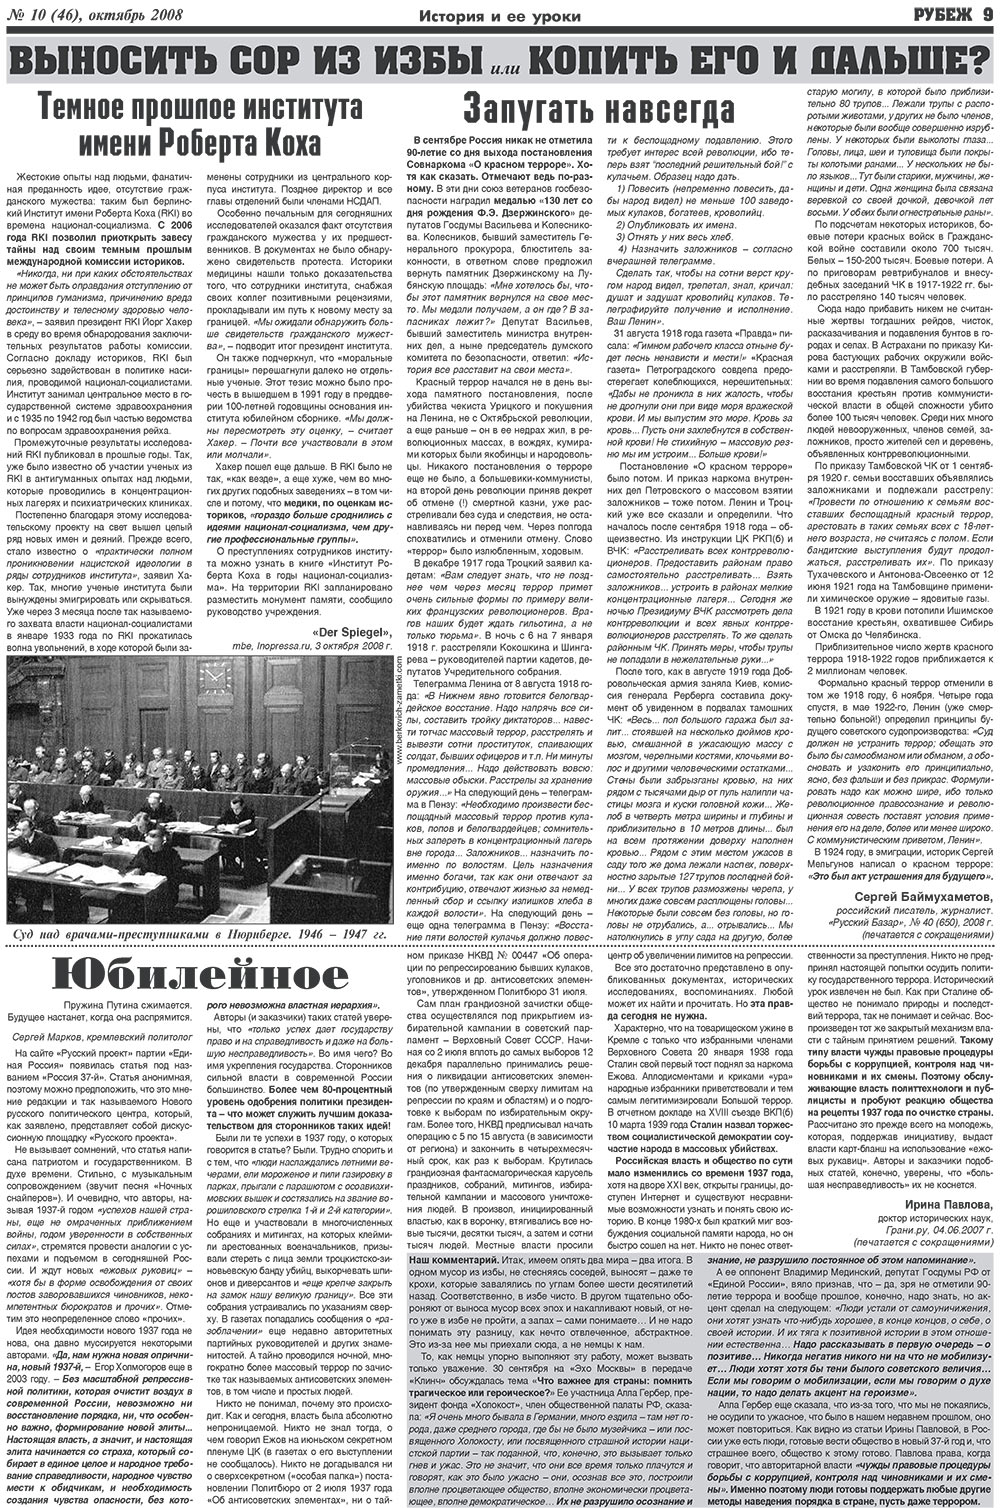 Рубеж, газета. 2008 №10 стр.9